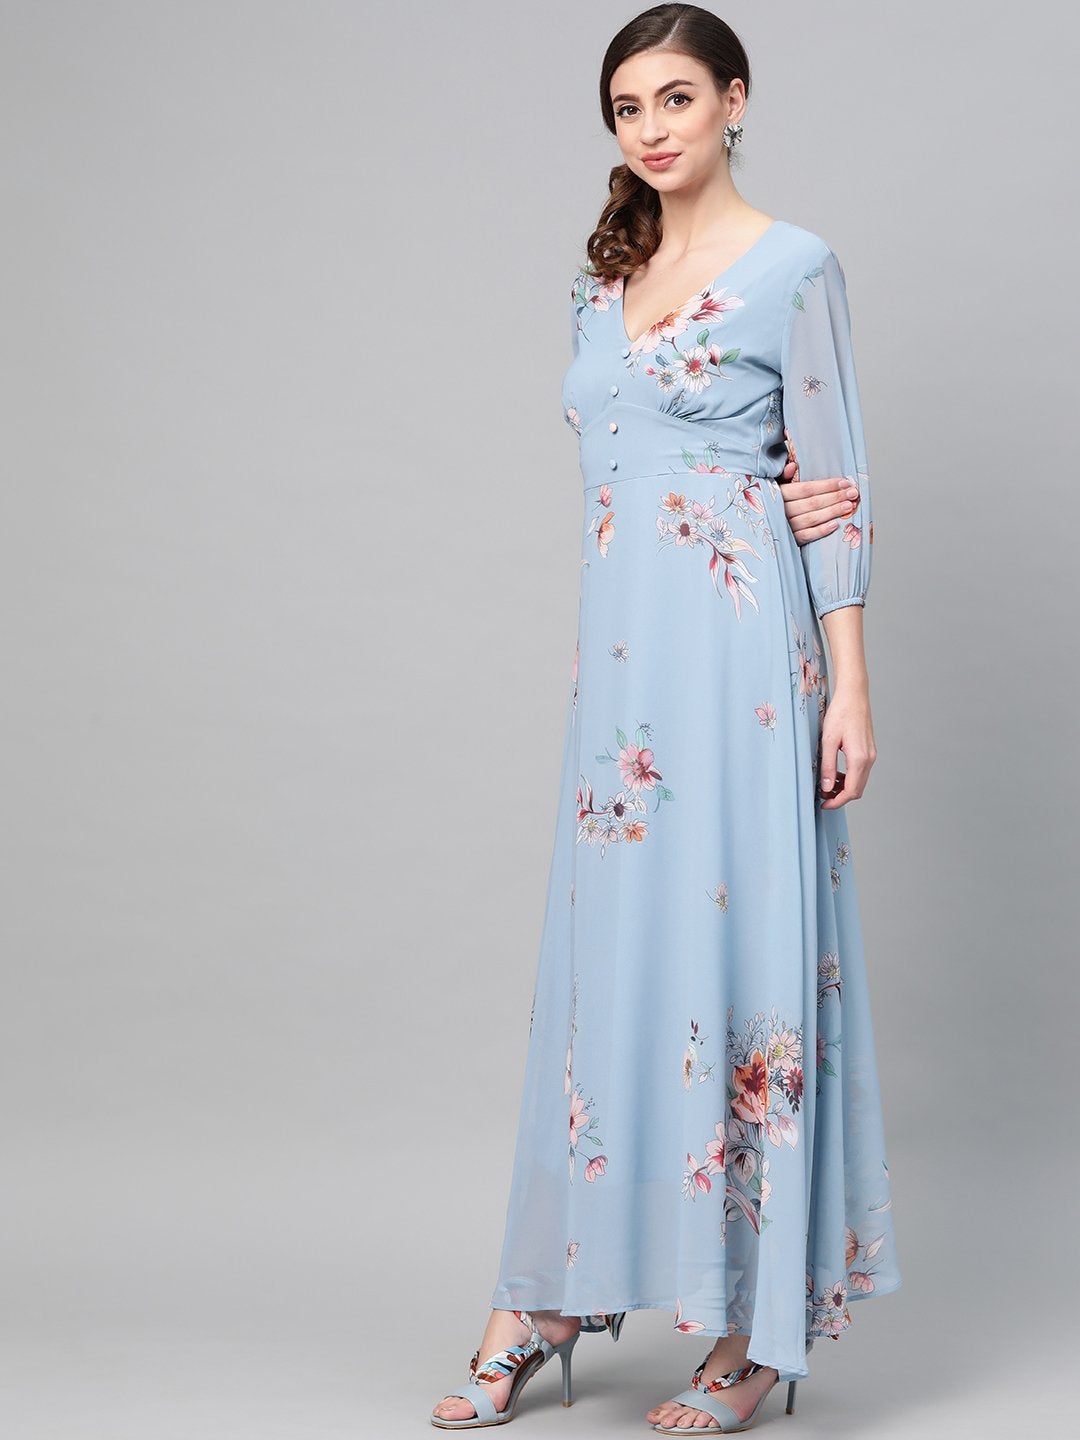 Women's Pale Blue Floral Flared Maxi Dress - SASSAFRAS